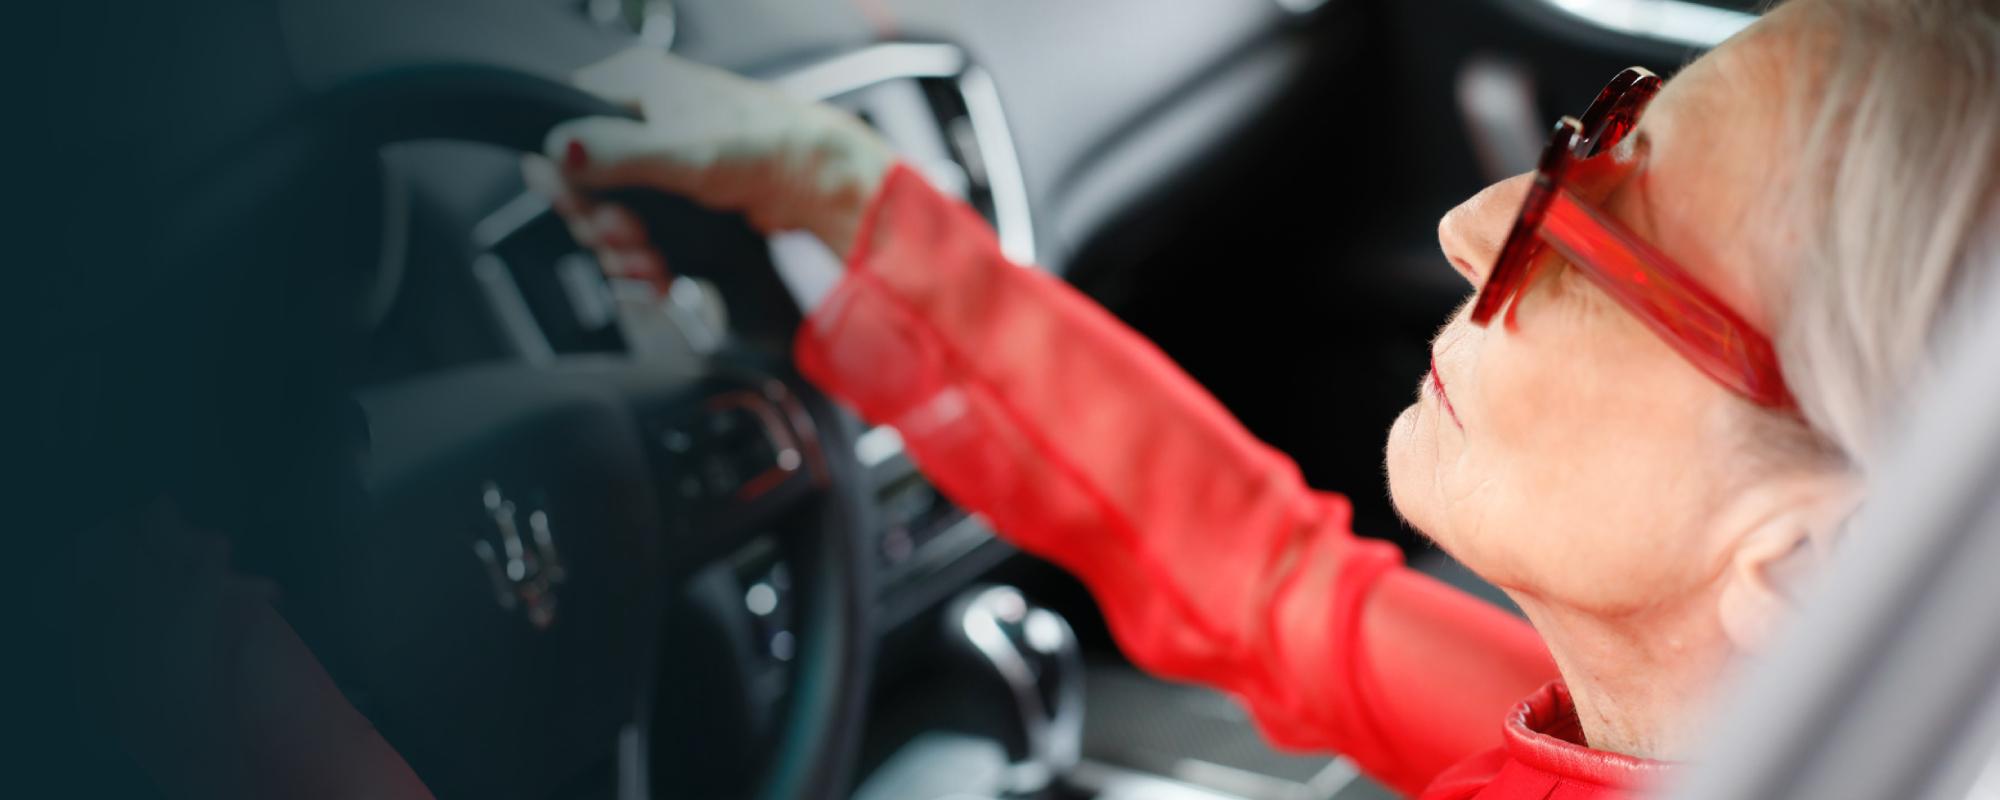 Hero-woman-driving-red-jacket